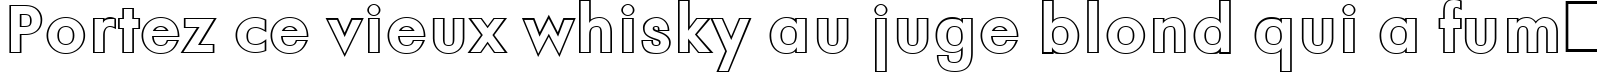 Пример написания шрифтом a_FuturaOrtoOtl Bold текста на французском